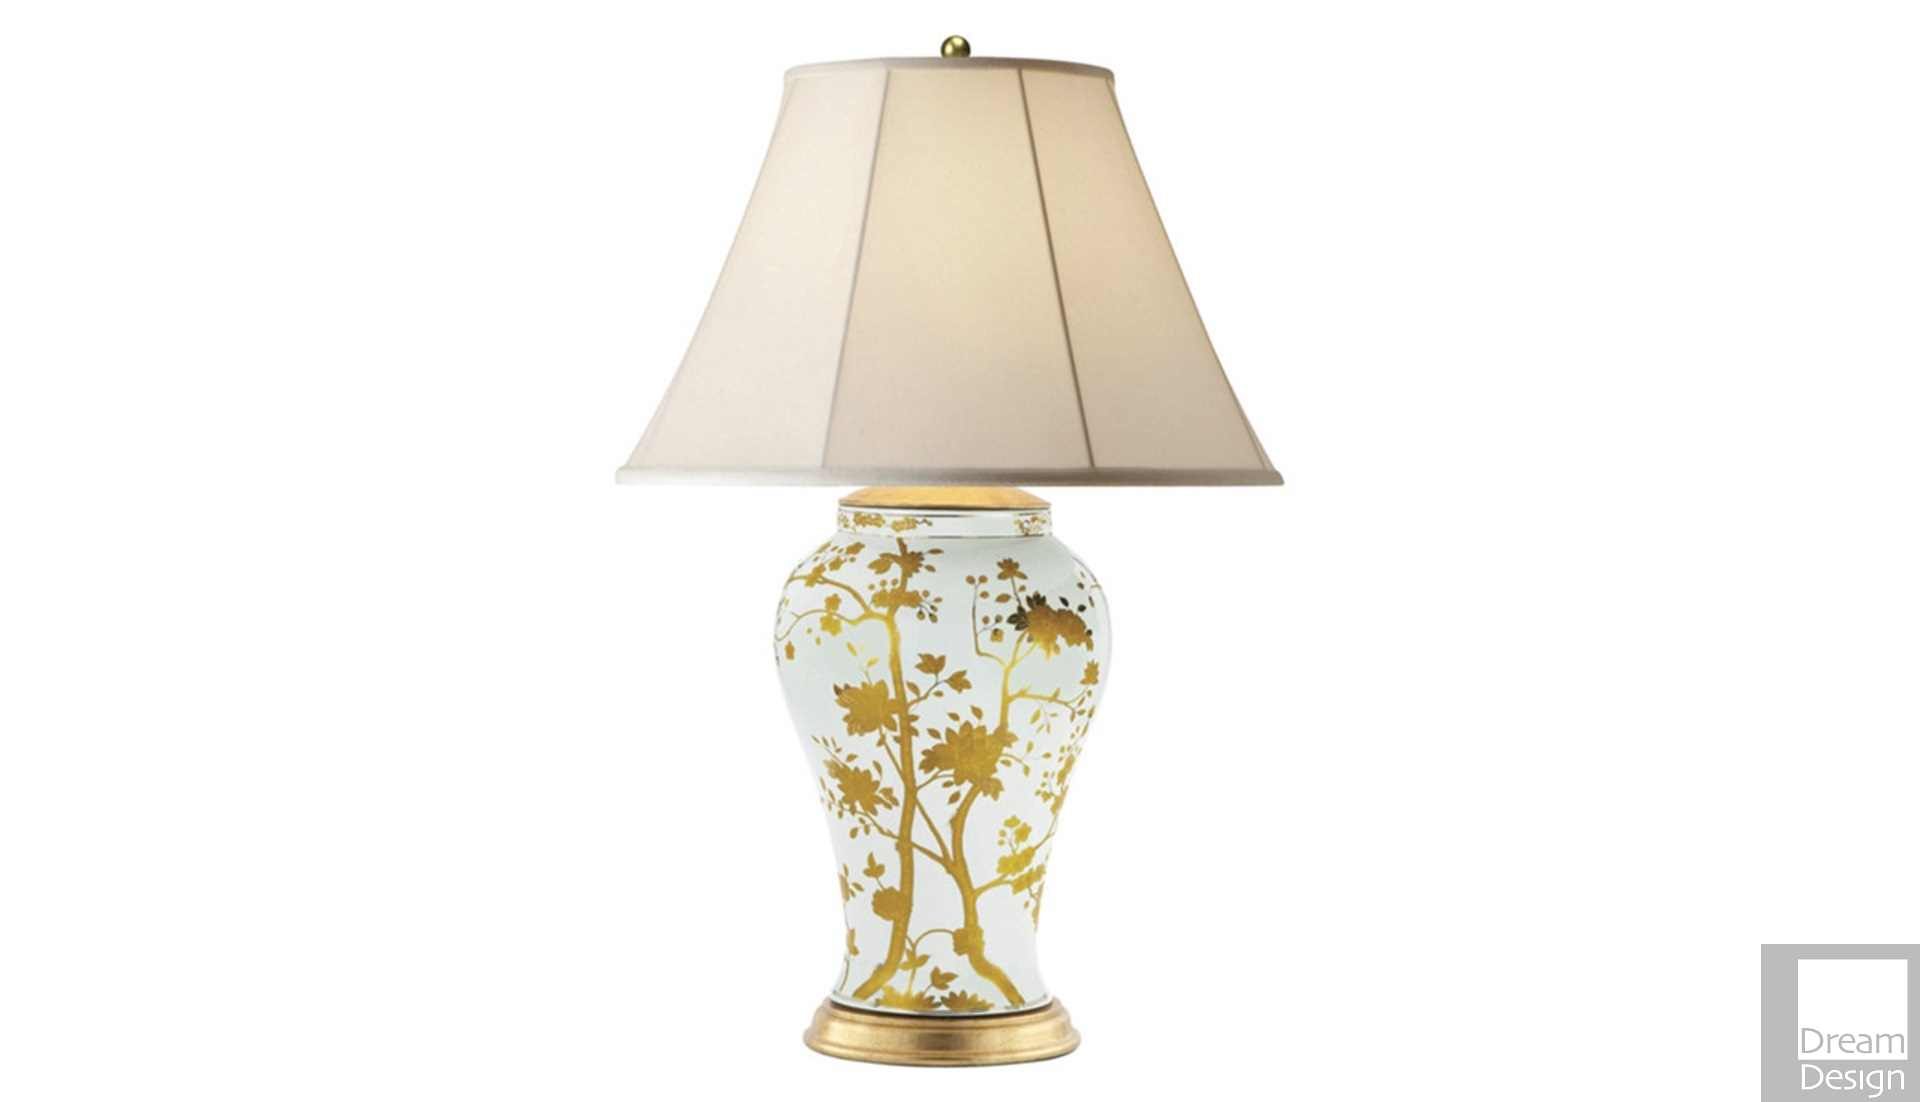 Ralph Lauren Home Gable Table Lamp